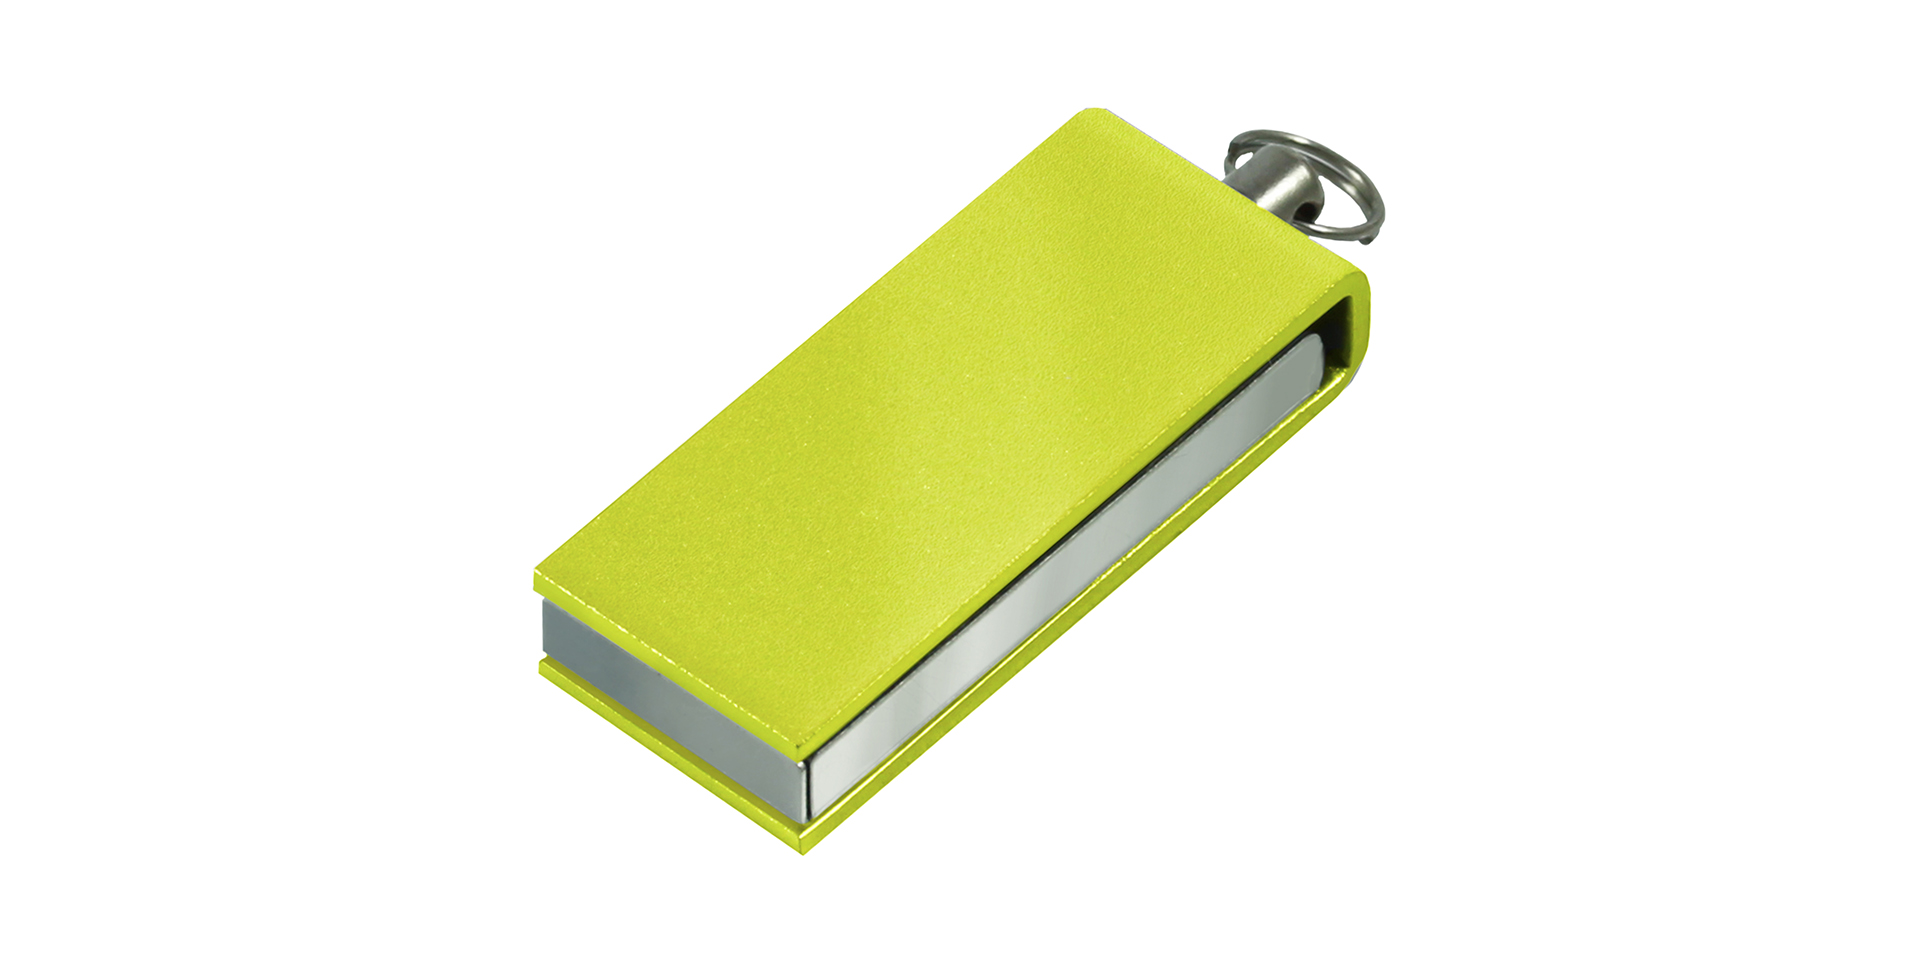 USB jaune avec boîtier rotatif